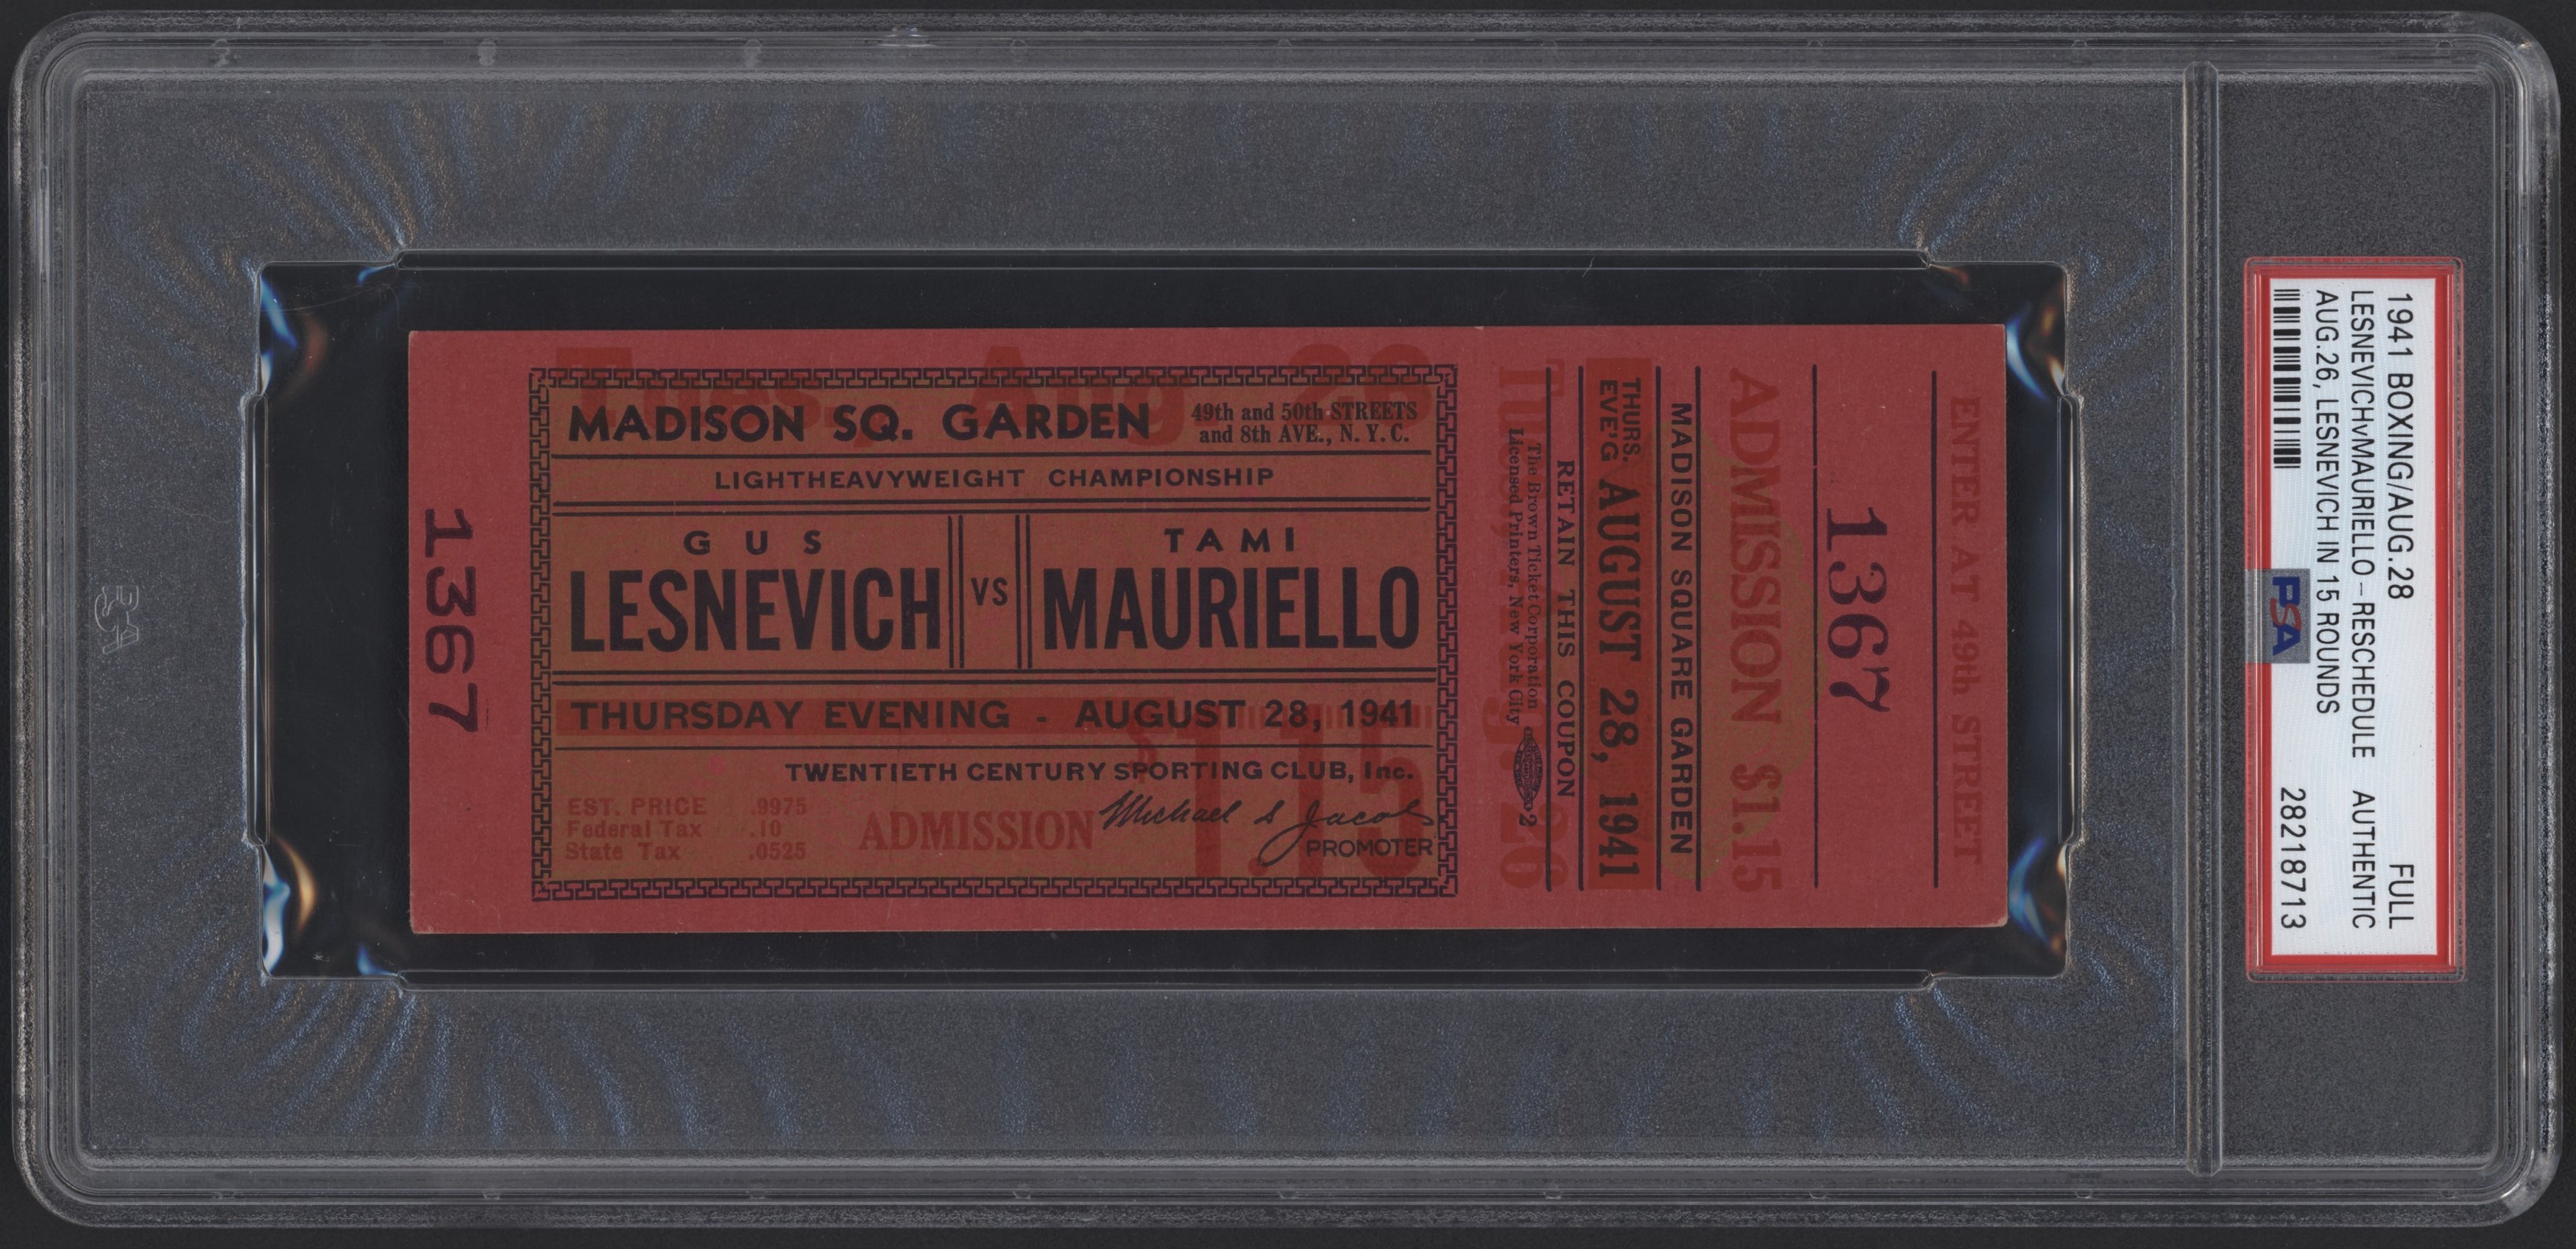 1941 Gus Lesnevich vs. Tami Mauriello Full Ticket